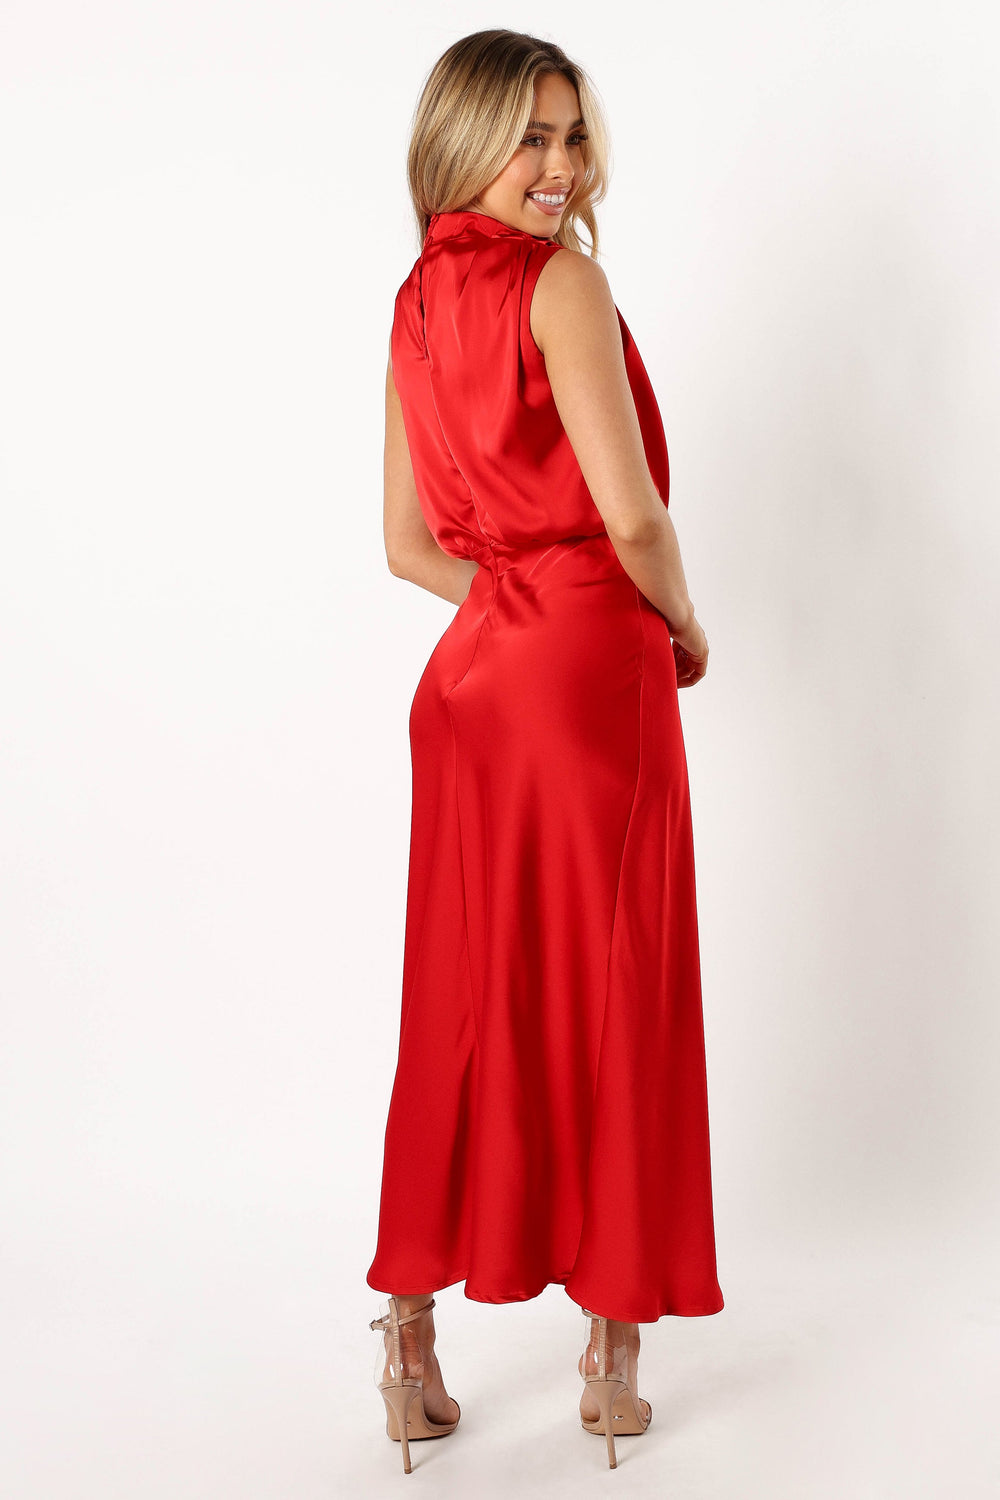 Shop Formal Dress - Anabelle Halter Neck Midi Dress - Red third image